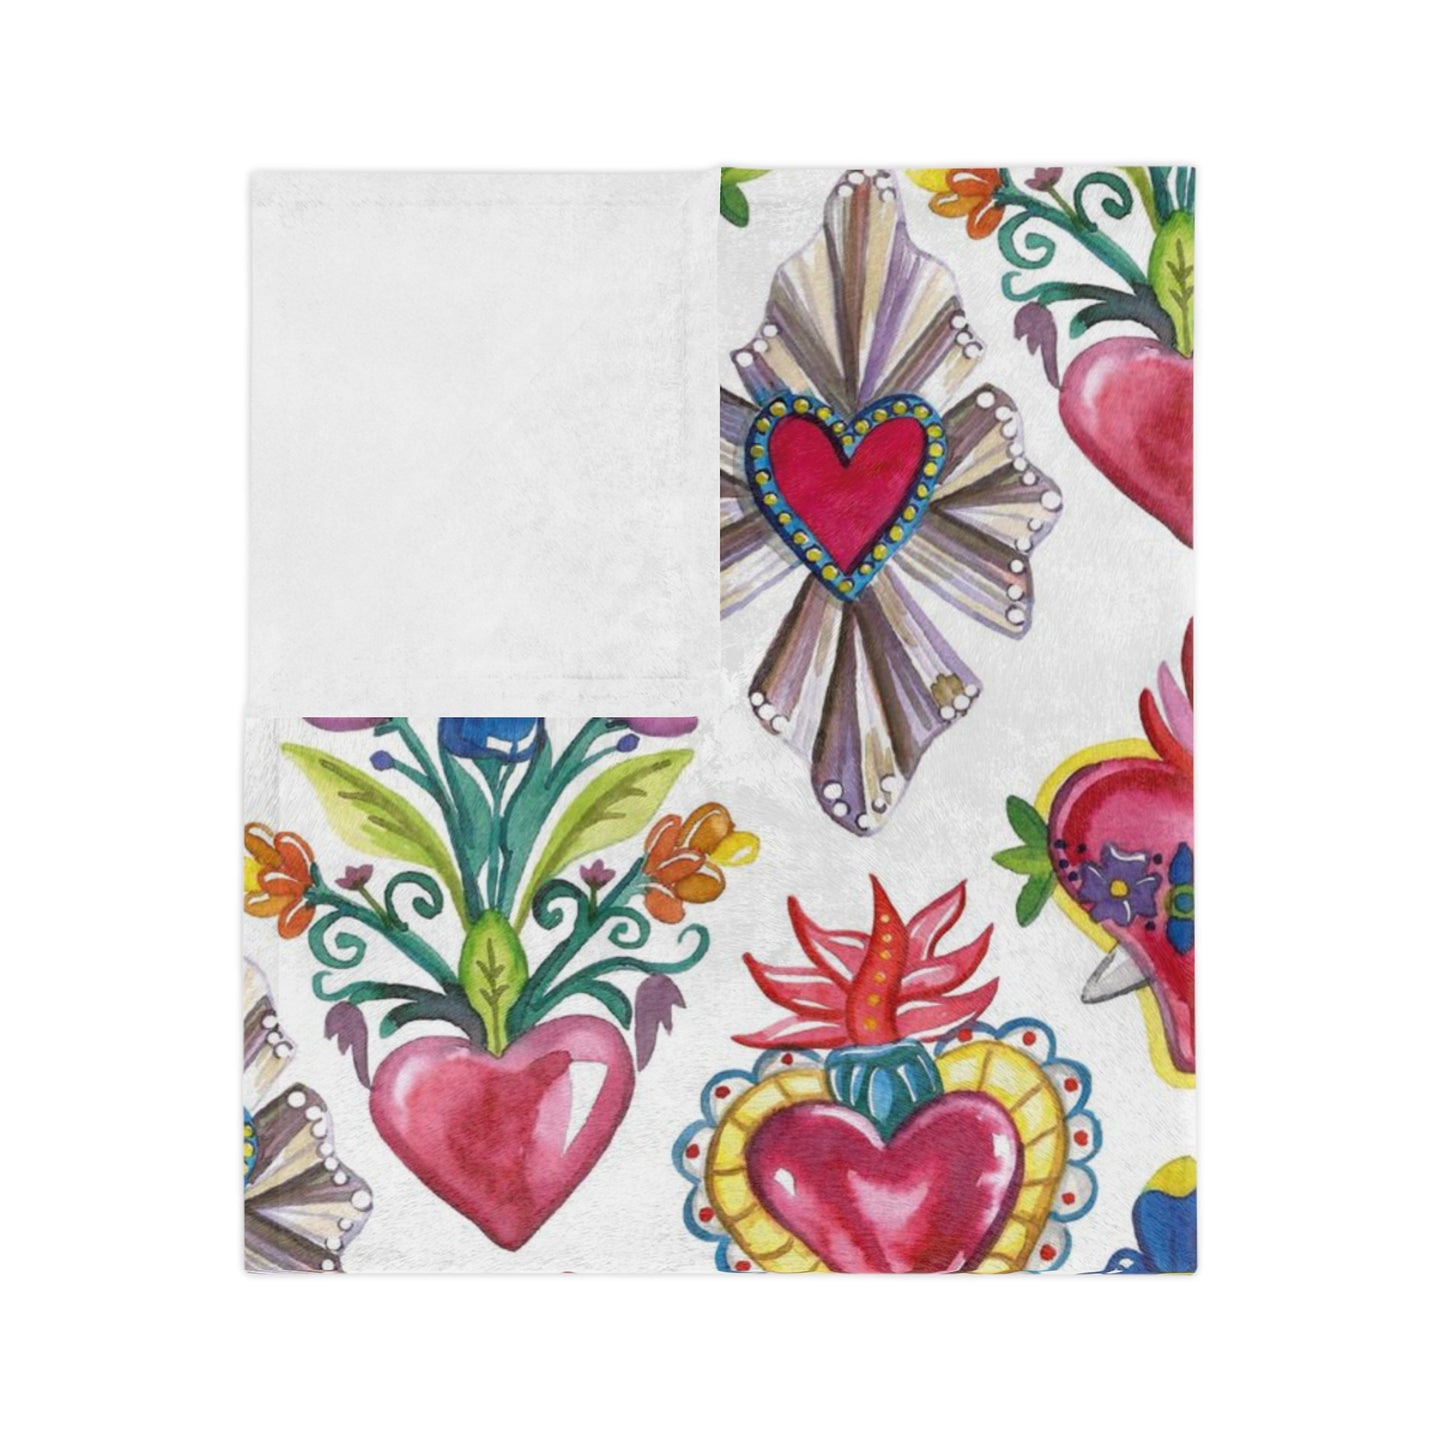 Mexican folk soft printed Blanket for him or her. Mexican folk art. Sagrado corazon